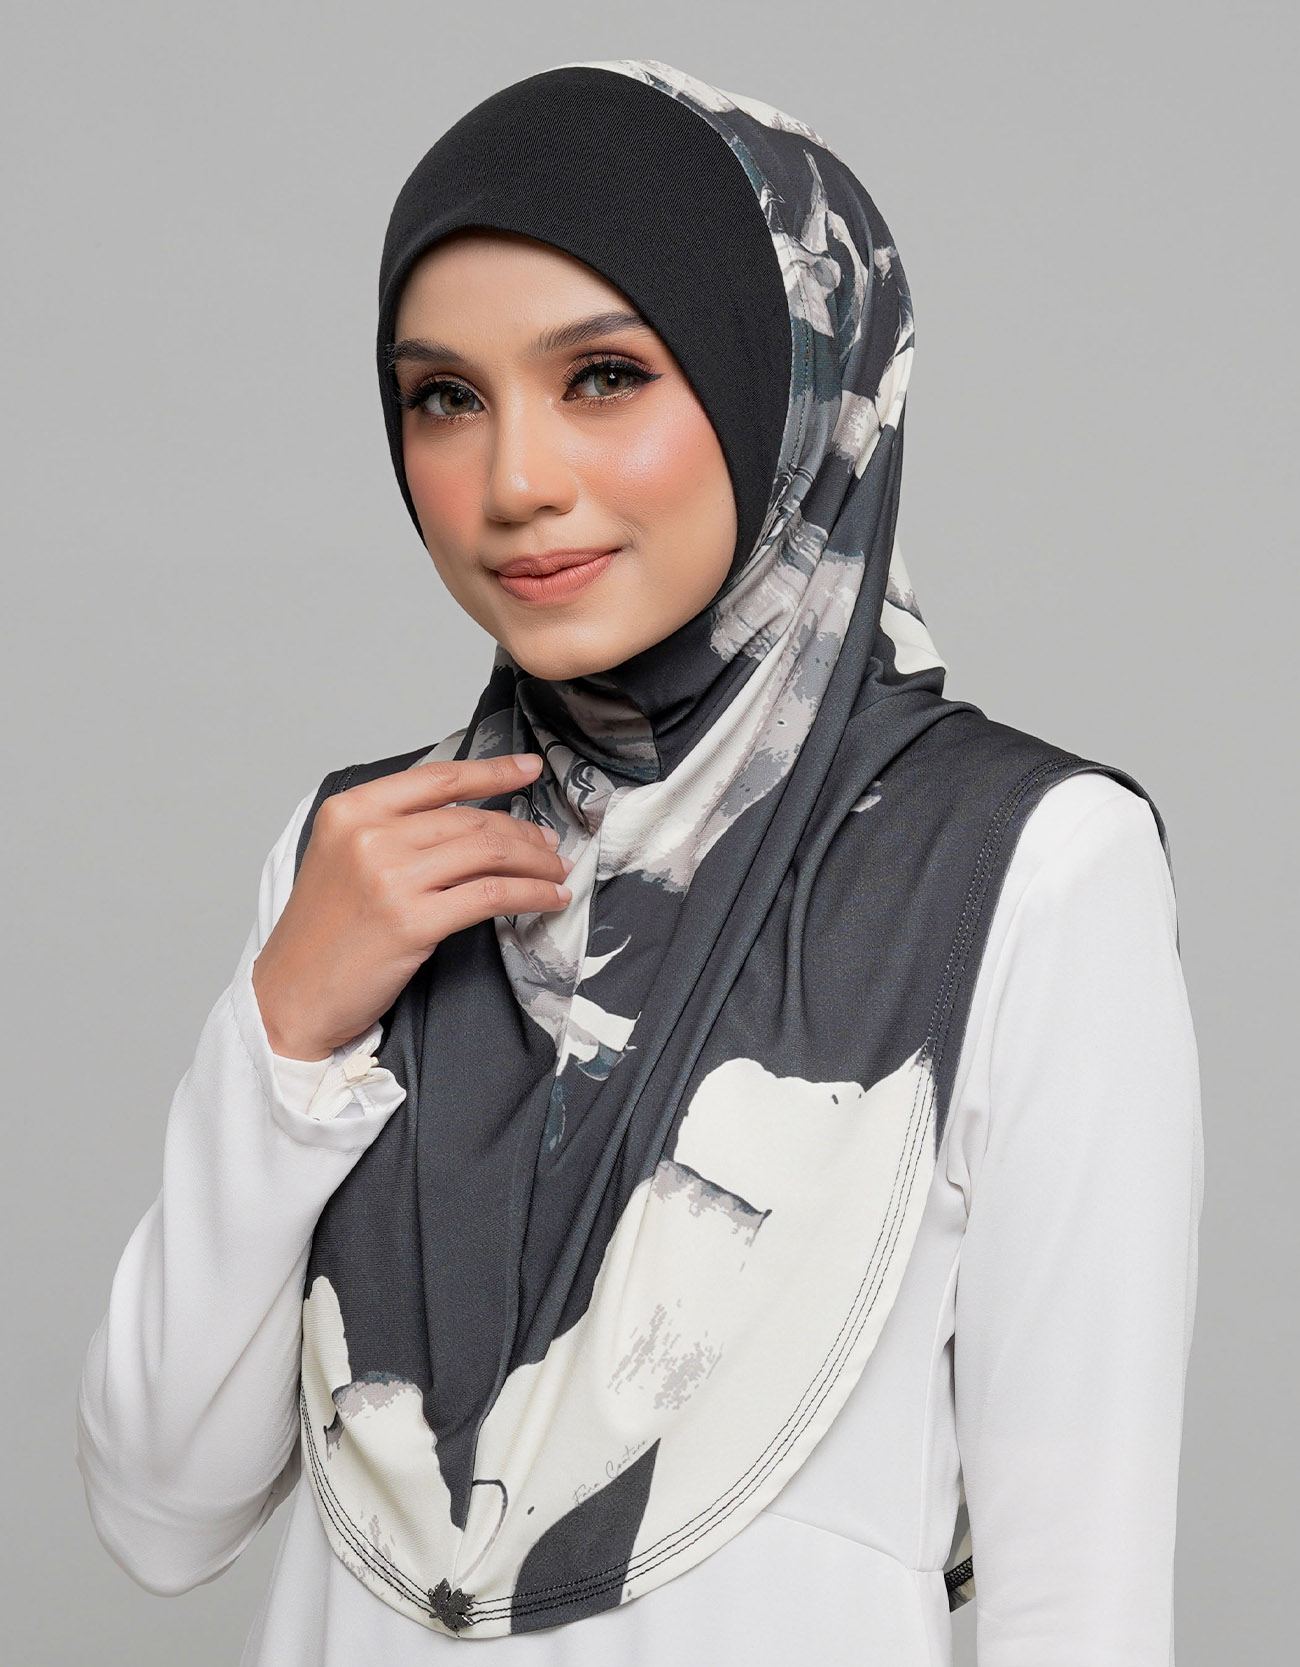 Express Hijab Damia Signature 08 - Black Edition